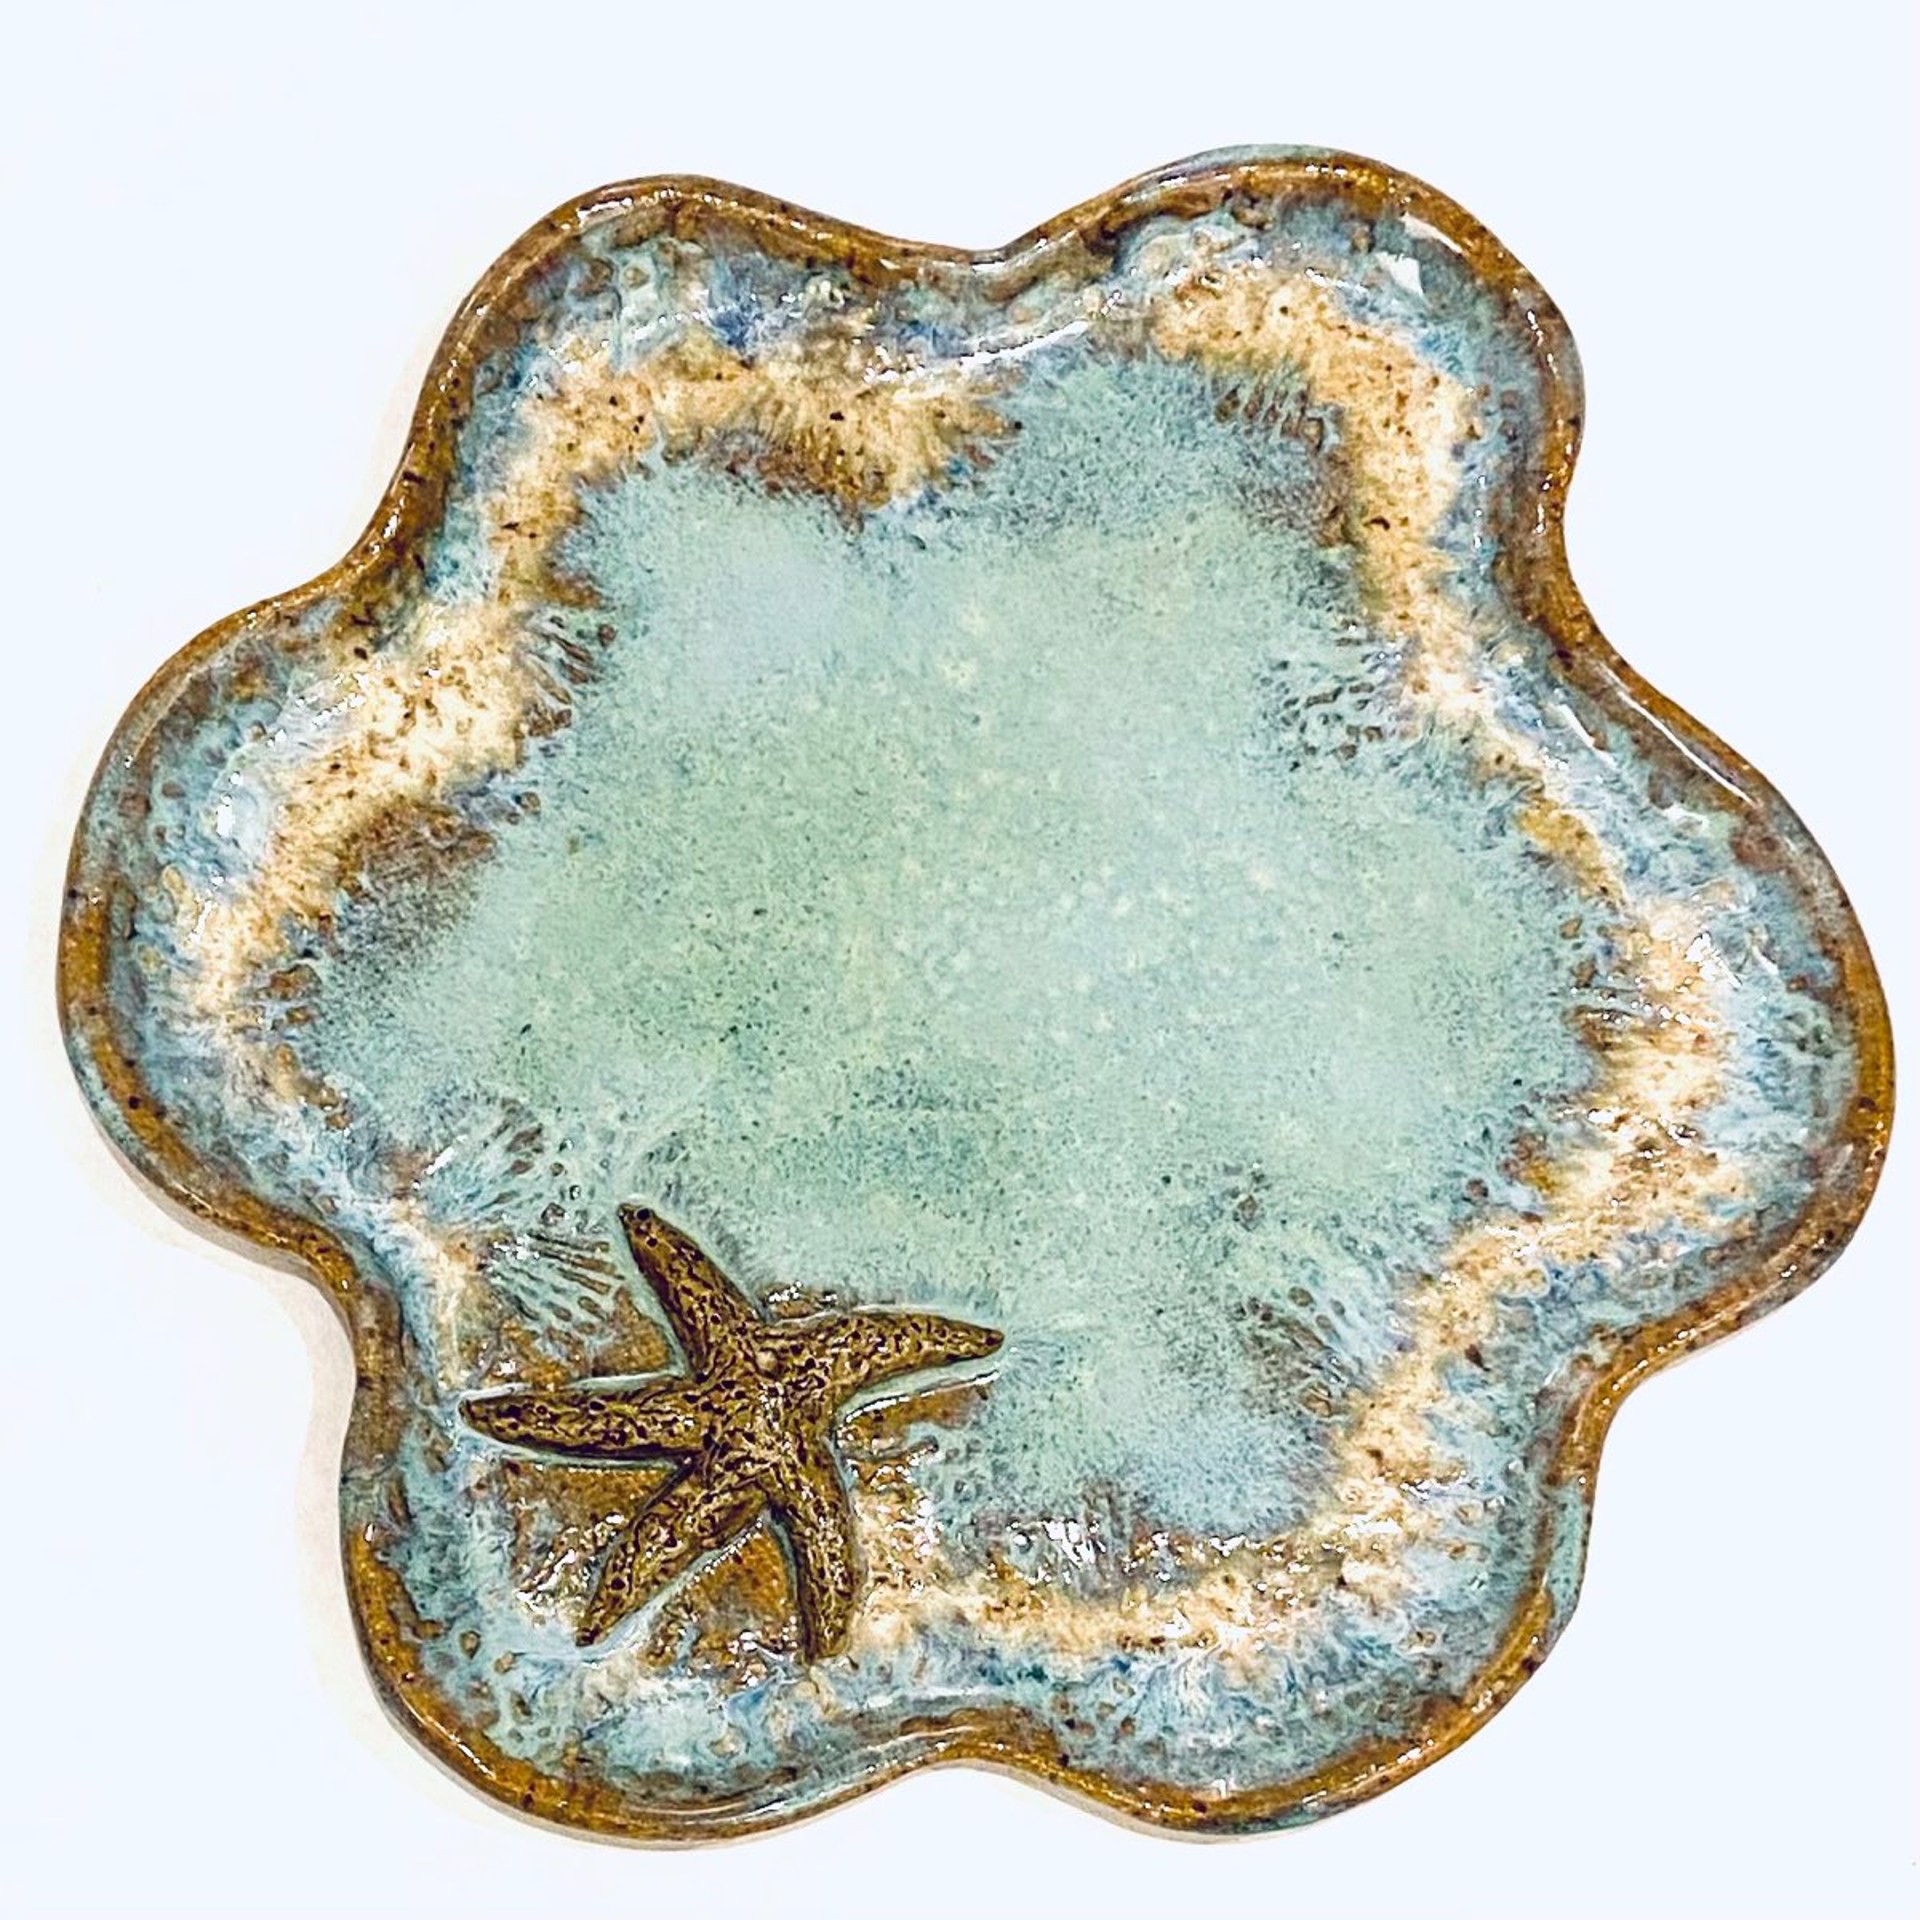 Logan22-841  Small Plate with Starfish (Green Glaze) by Jim & Steffi Logan